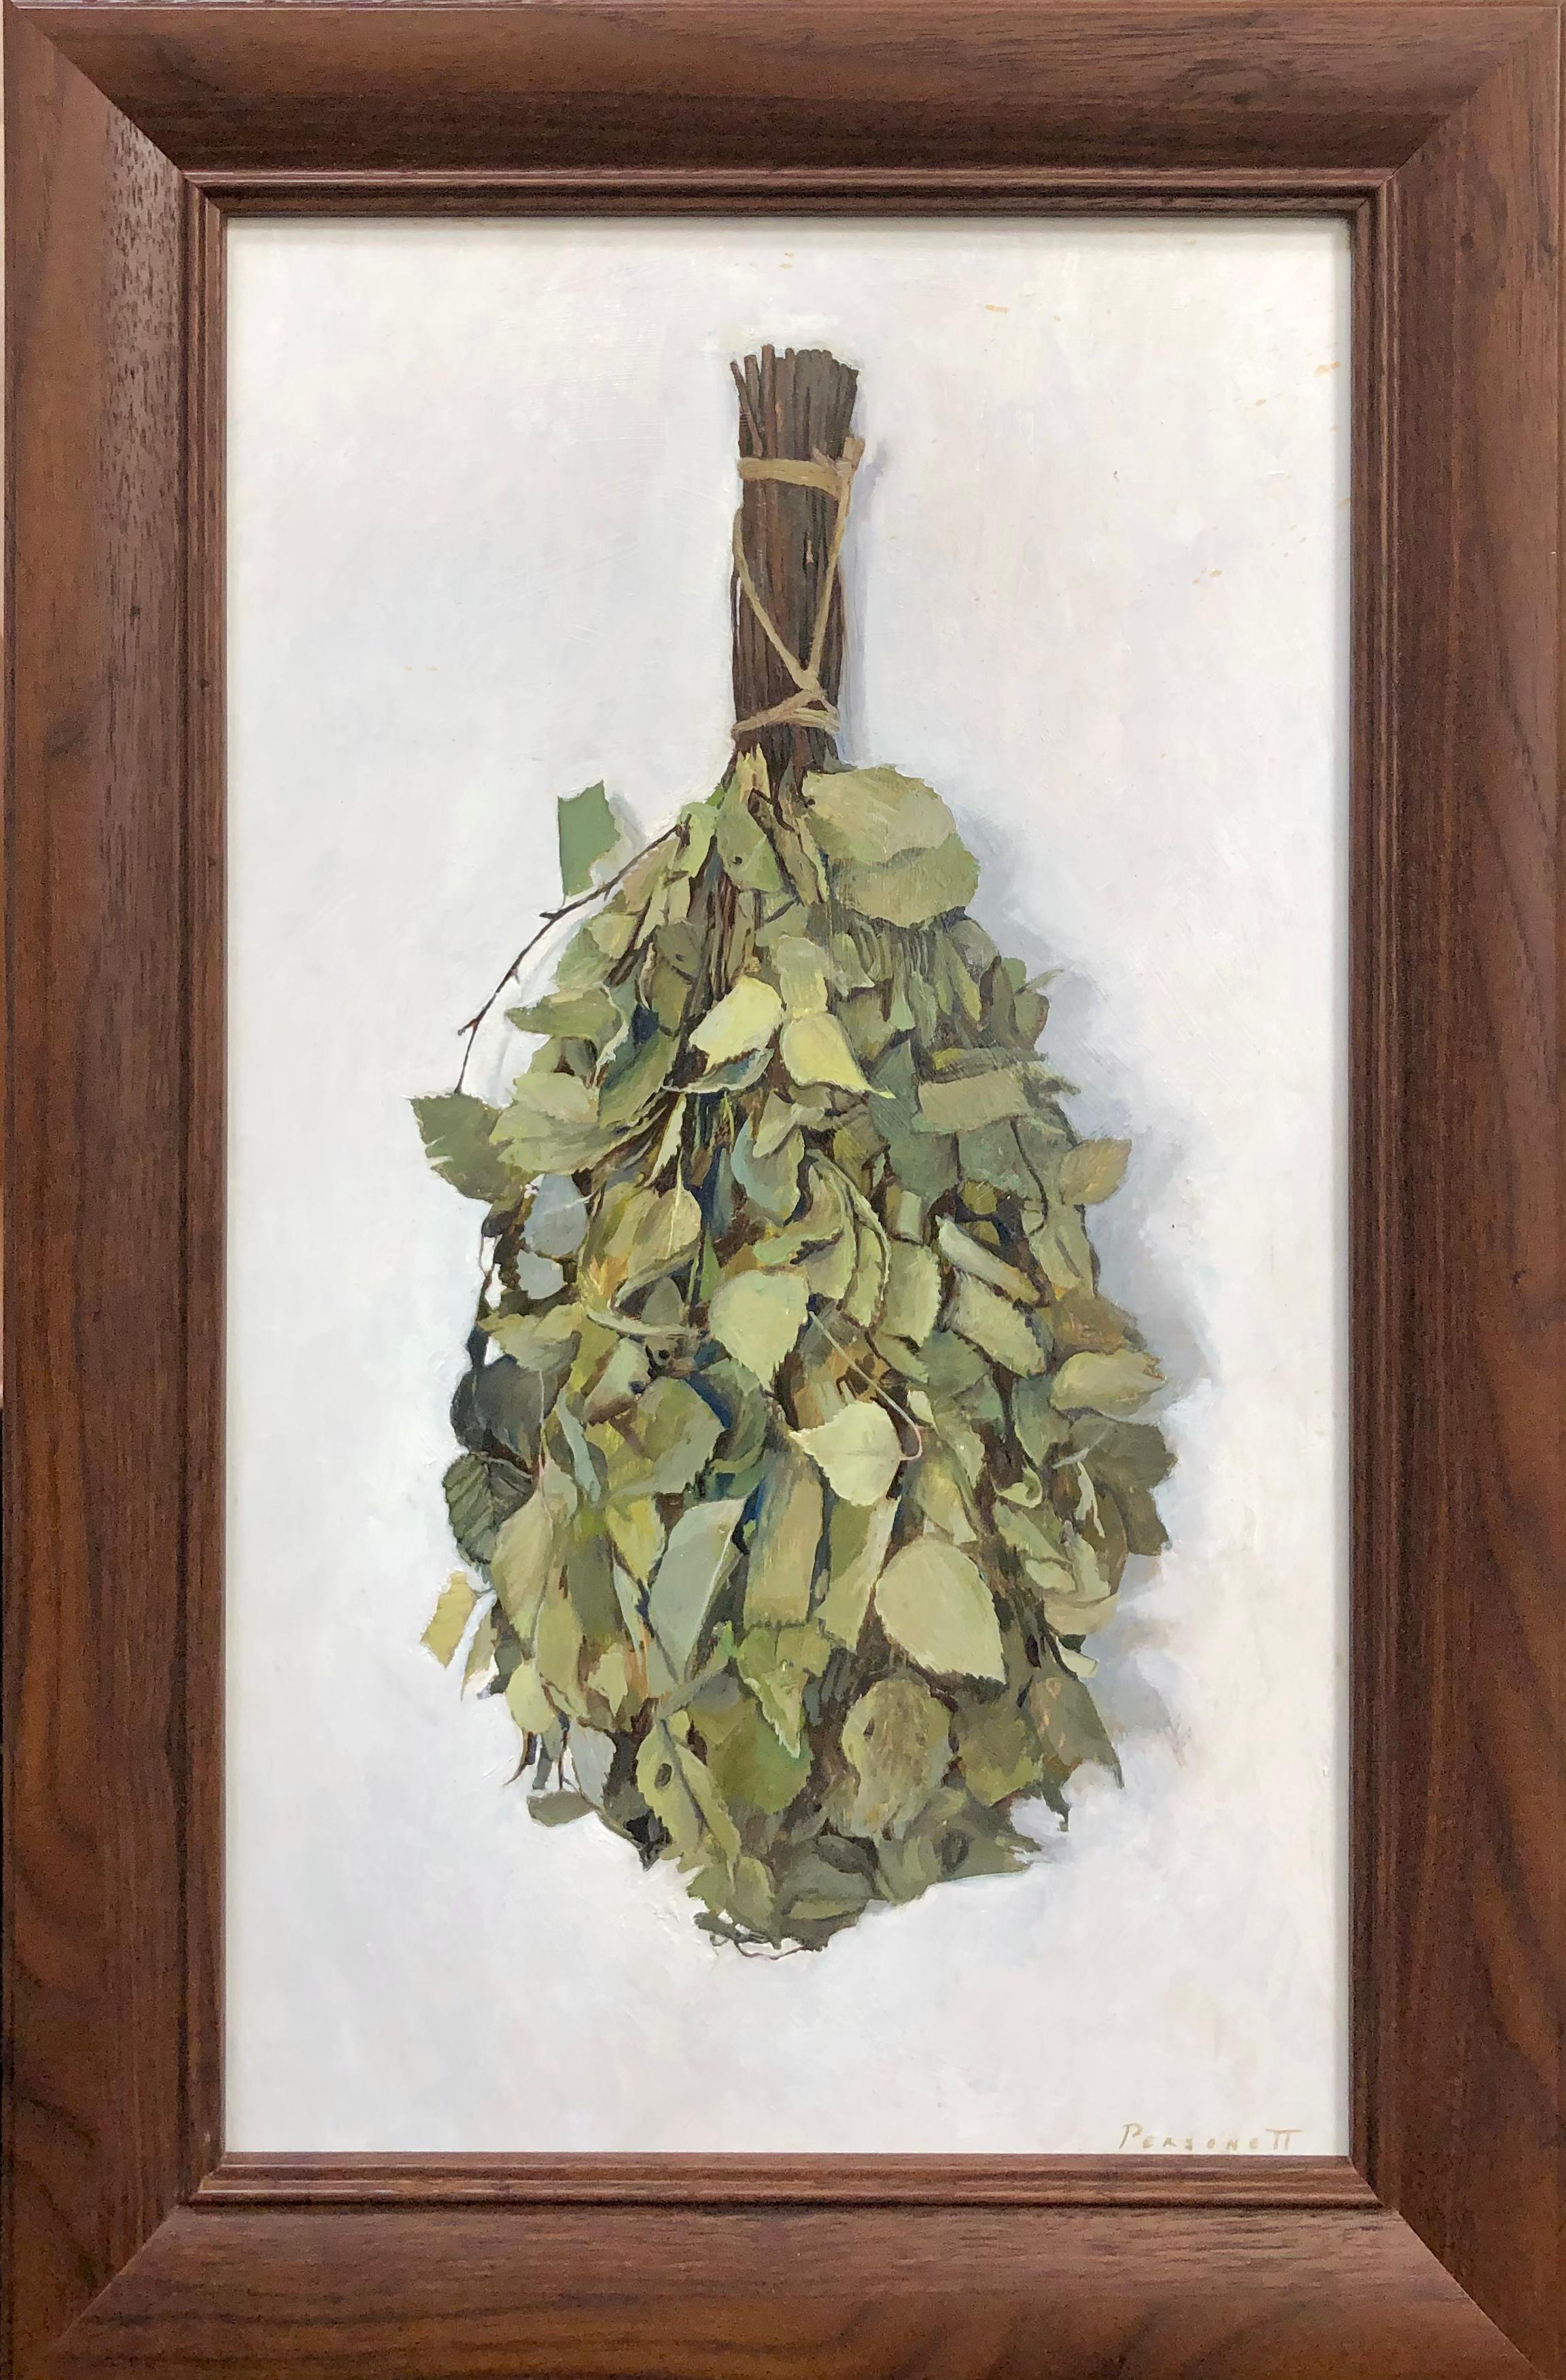 Rachel Personett Interior Painting - "Birch Branch" - contemporary realist still life painting, delicate green, white